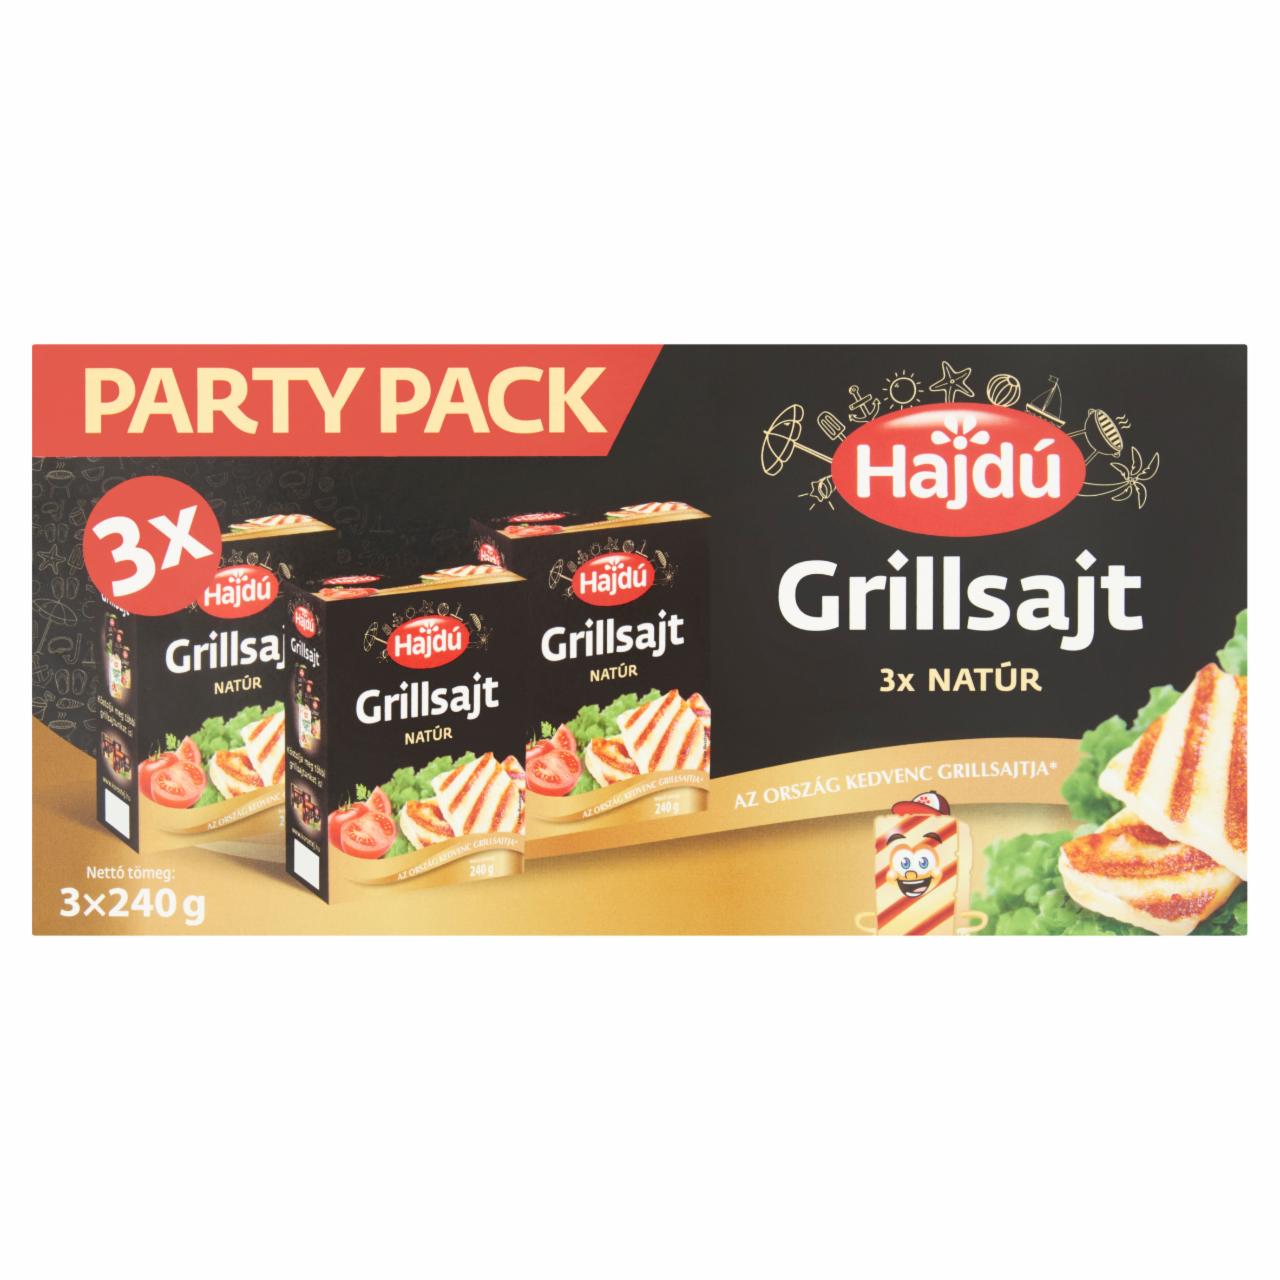 Képek - Hajdú Party Pack natúr grillsajt 3 x 240 g